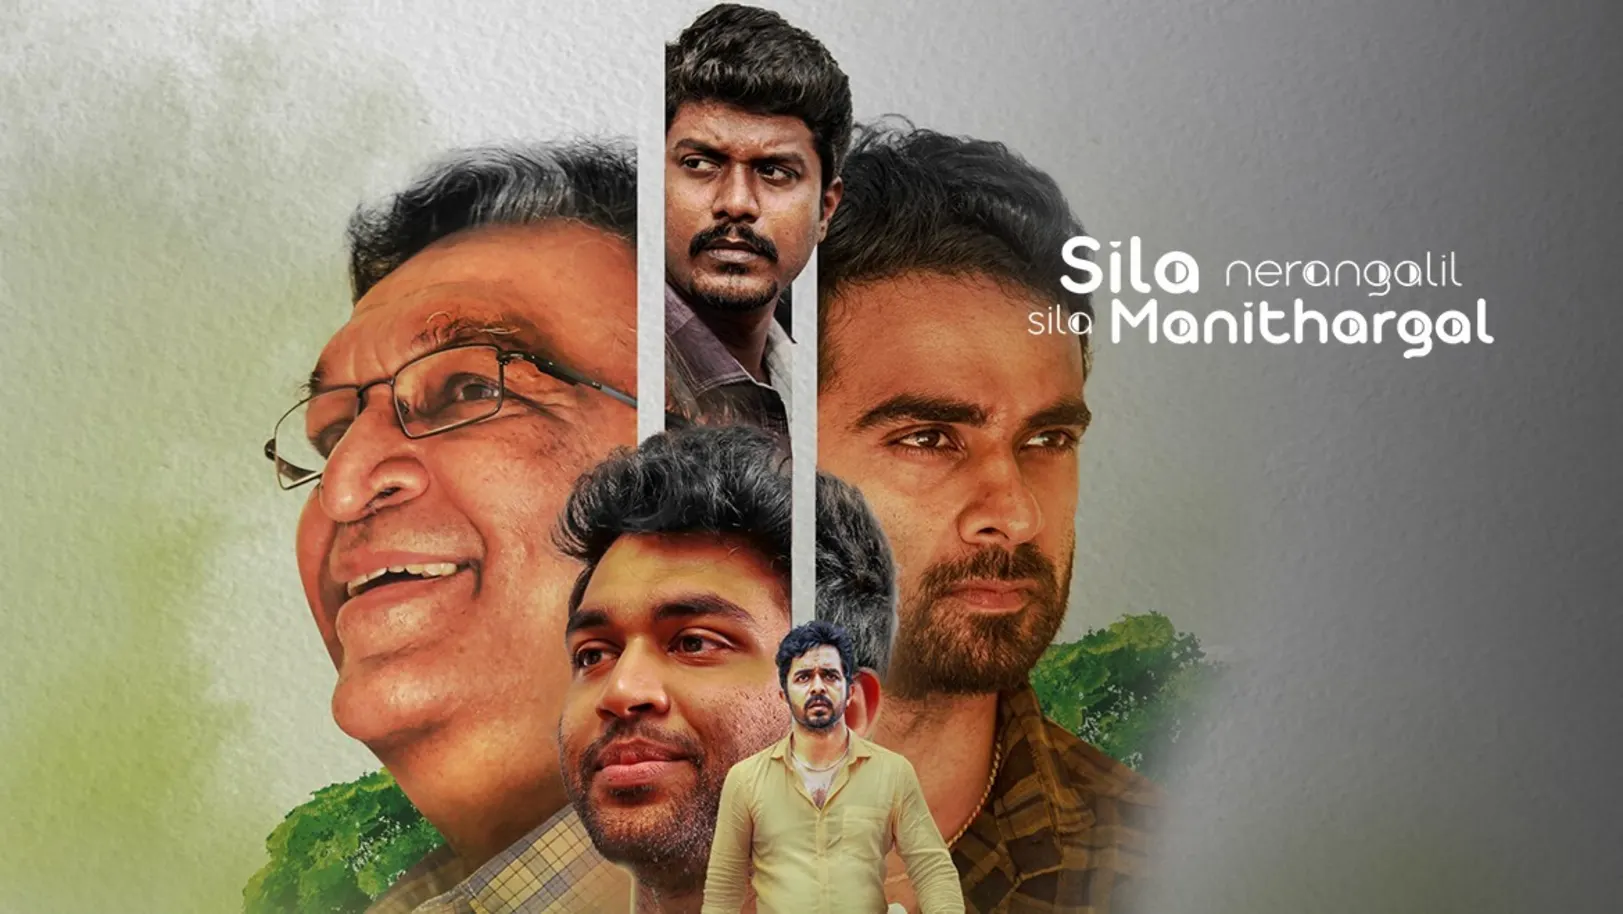 Sila Nerangalil Sila Manithargal Movie